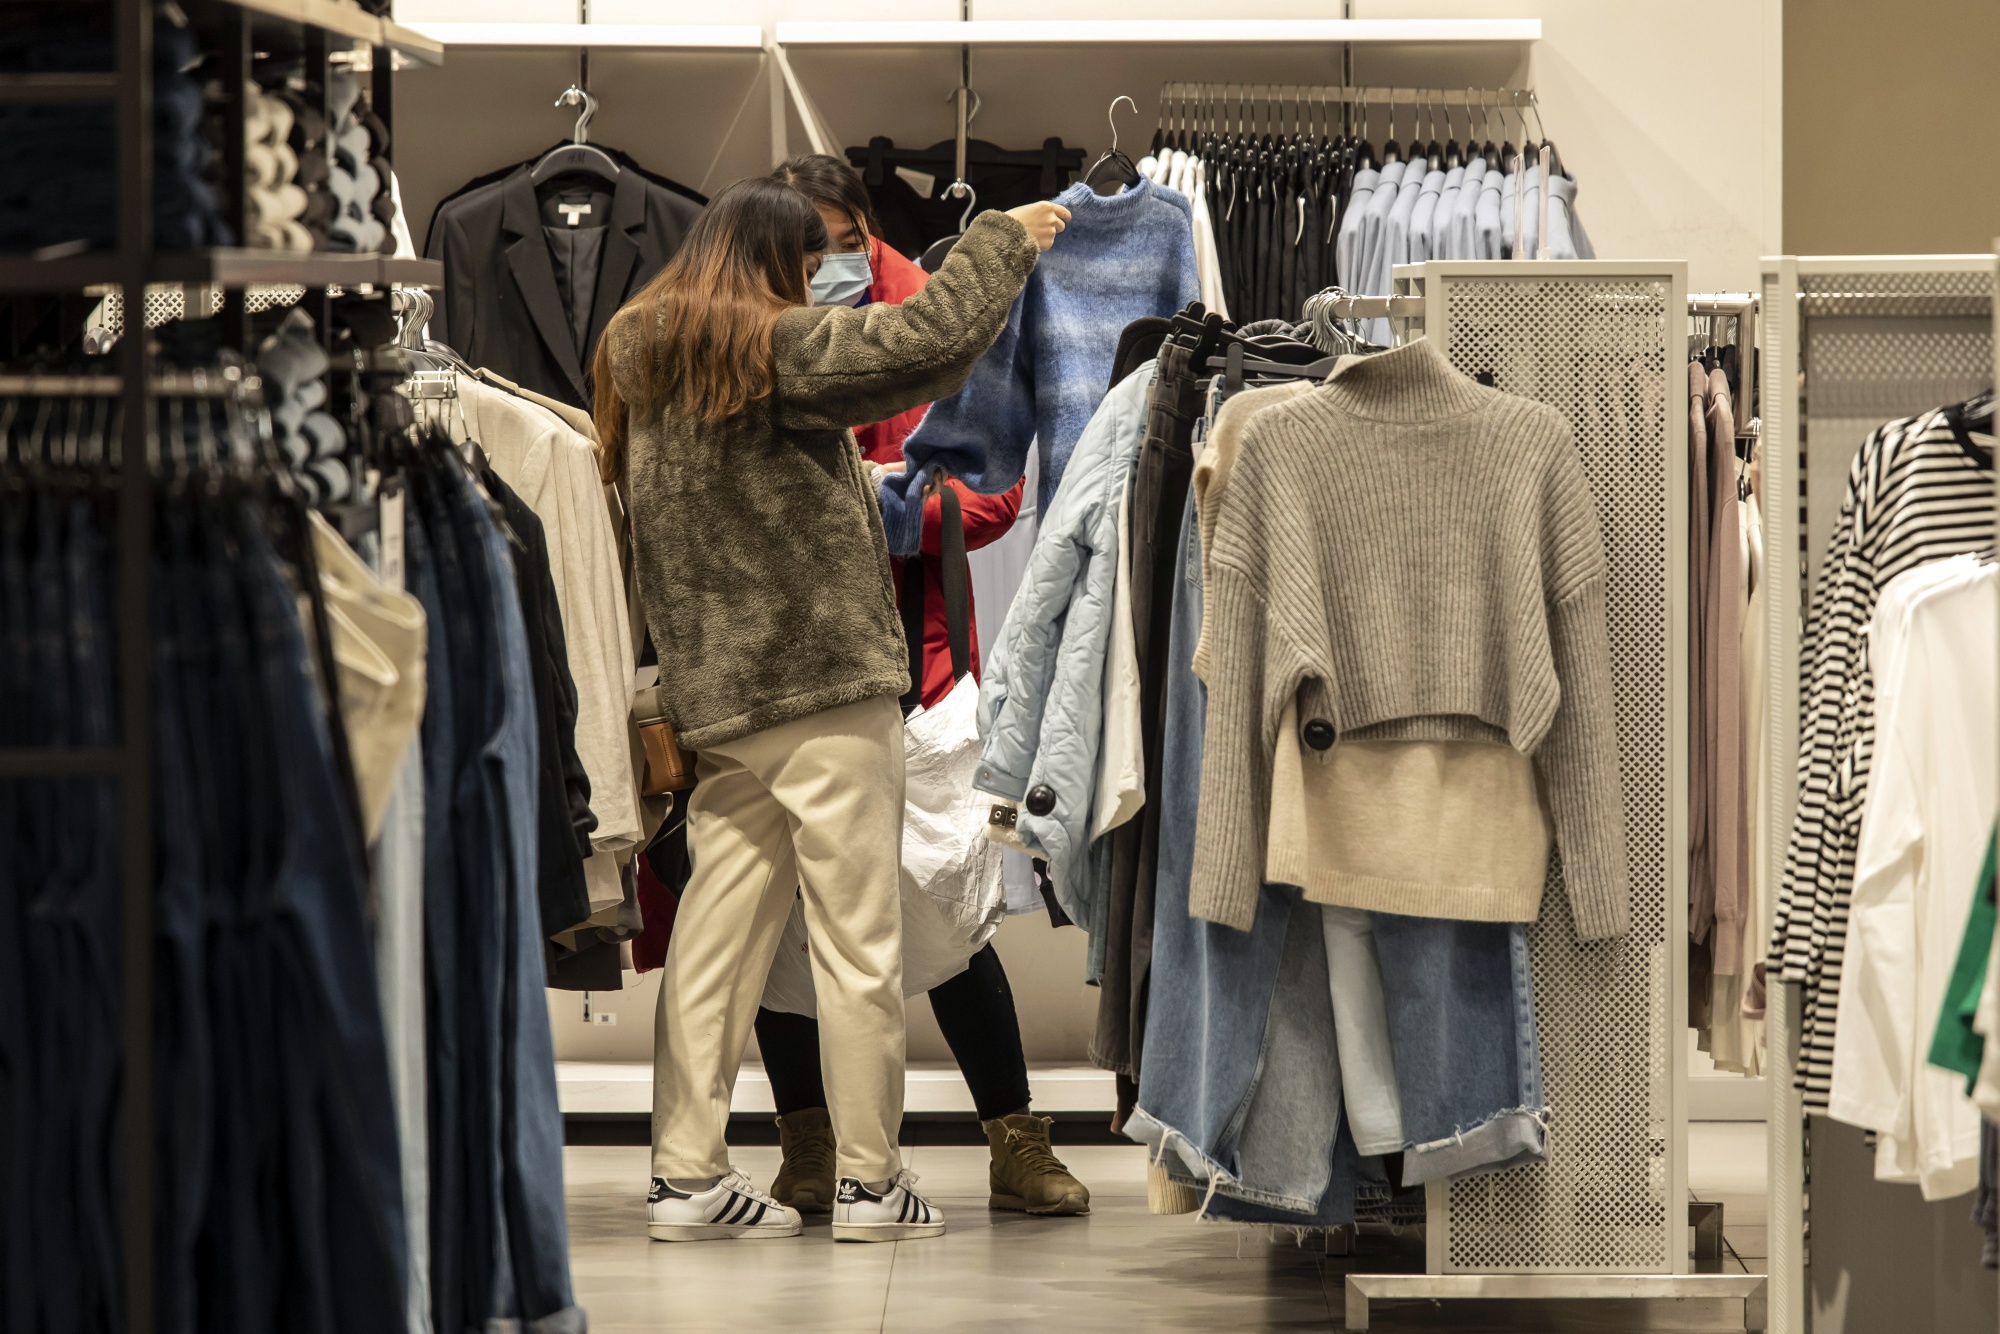 H&M sales grow 23% year on year in first quarter - Retail Gazette